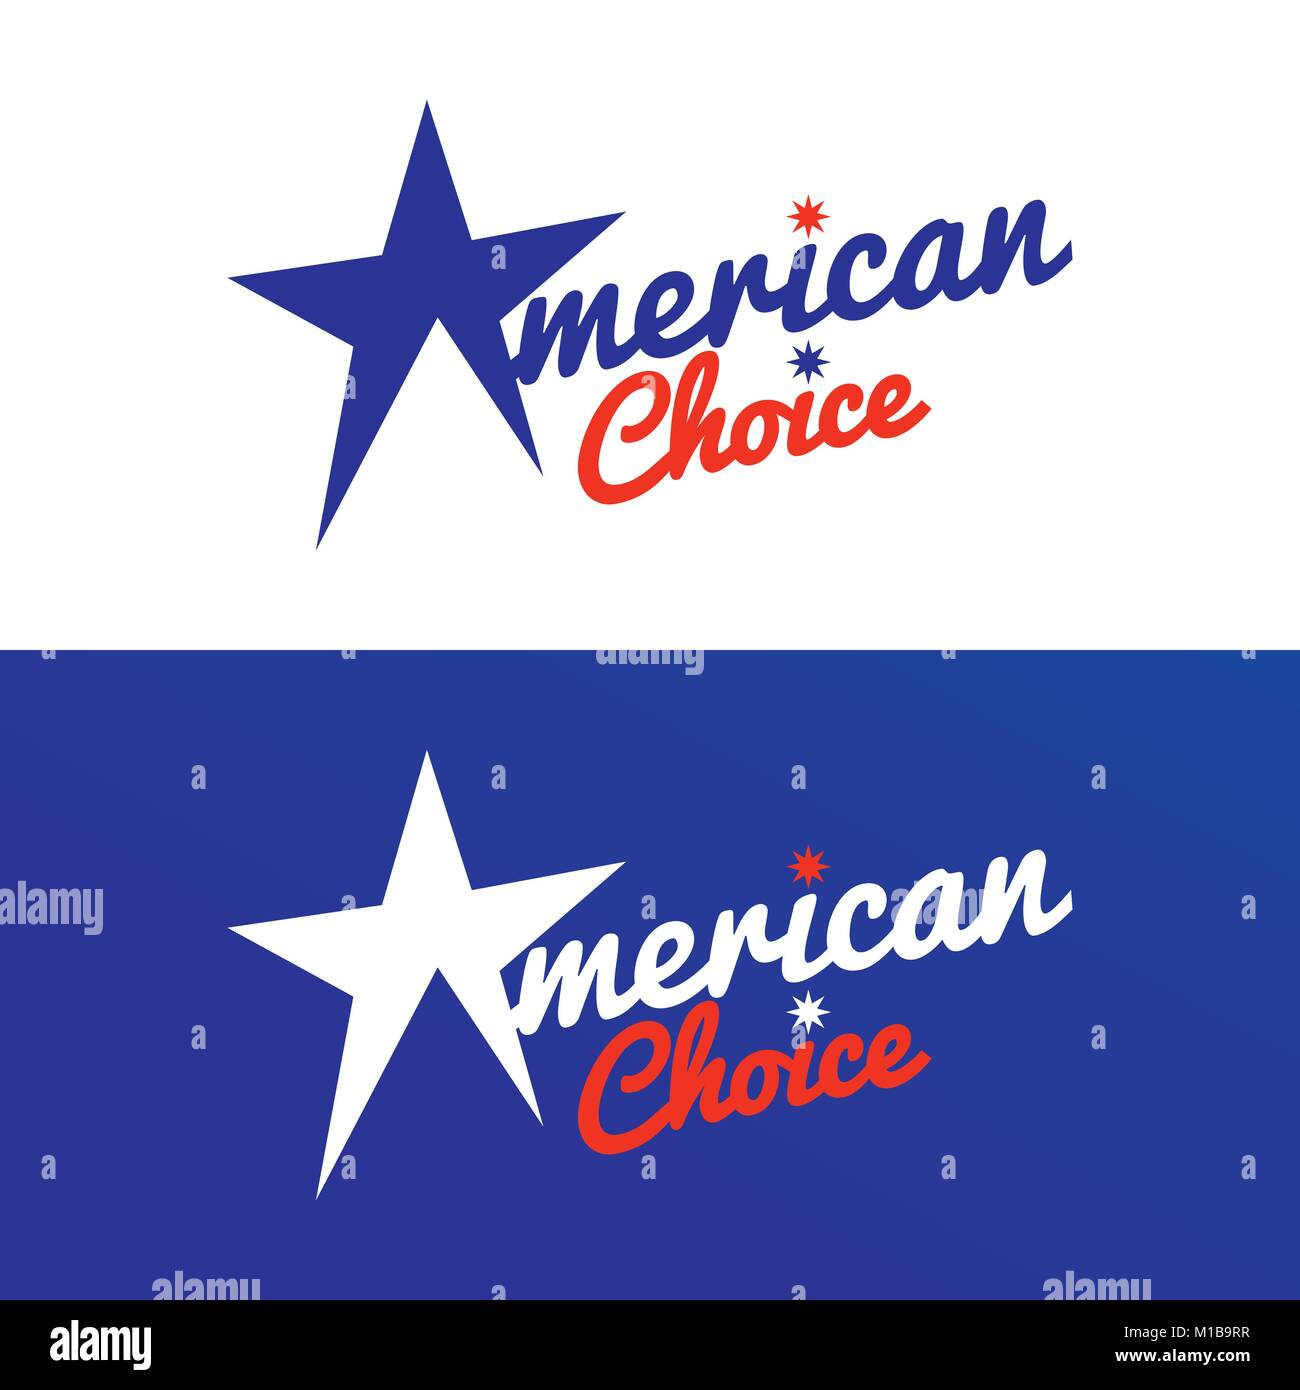 American Choice Star Vector Graphic Design Template Stock Vector